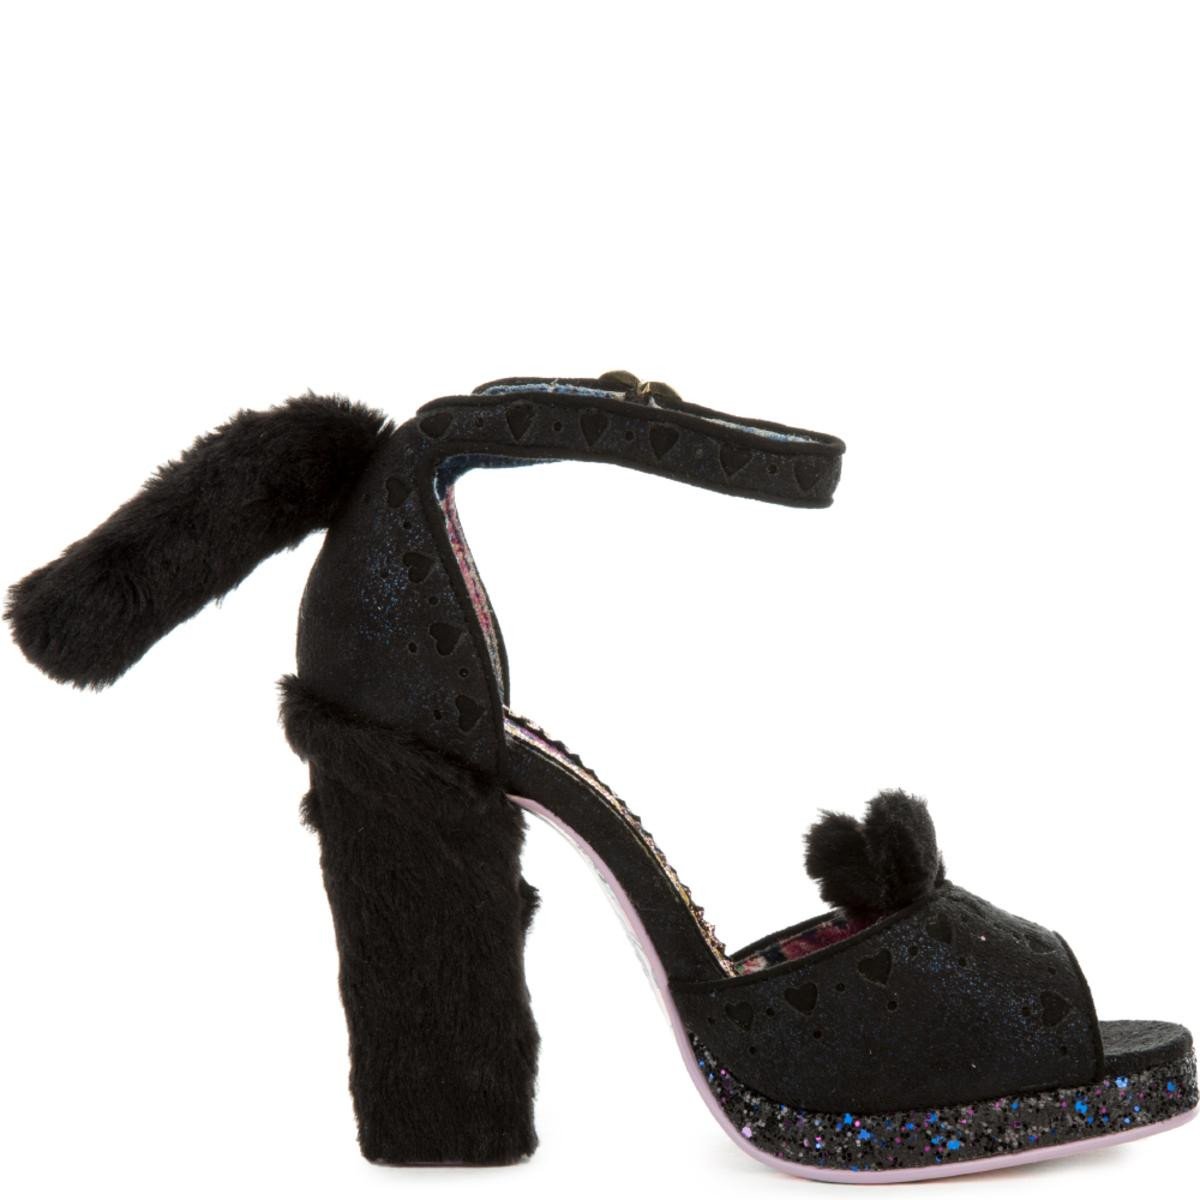 Kitty Paws Black High Heel Black